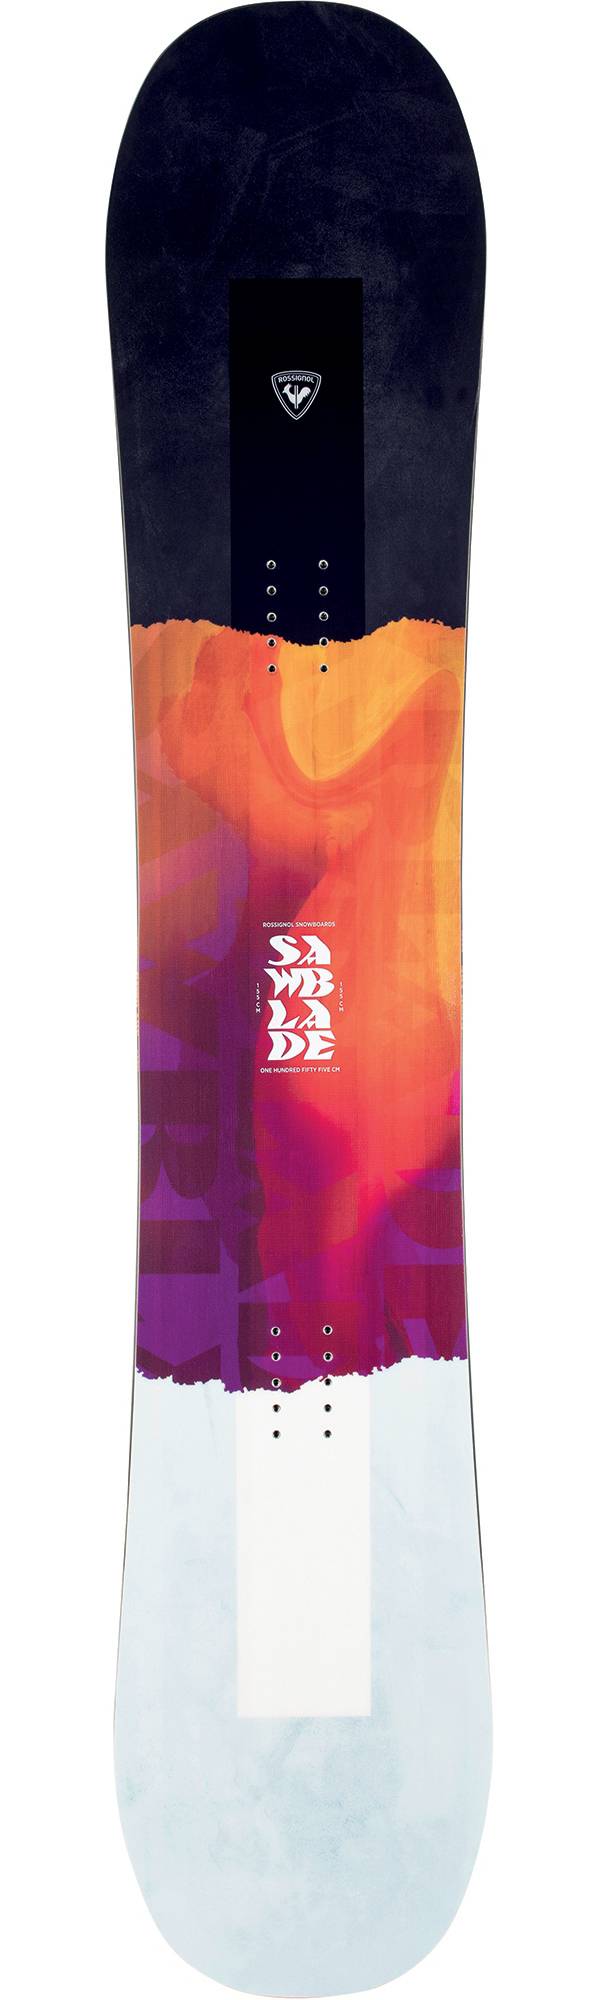 Rossignol Sawblade Snowboard product image